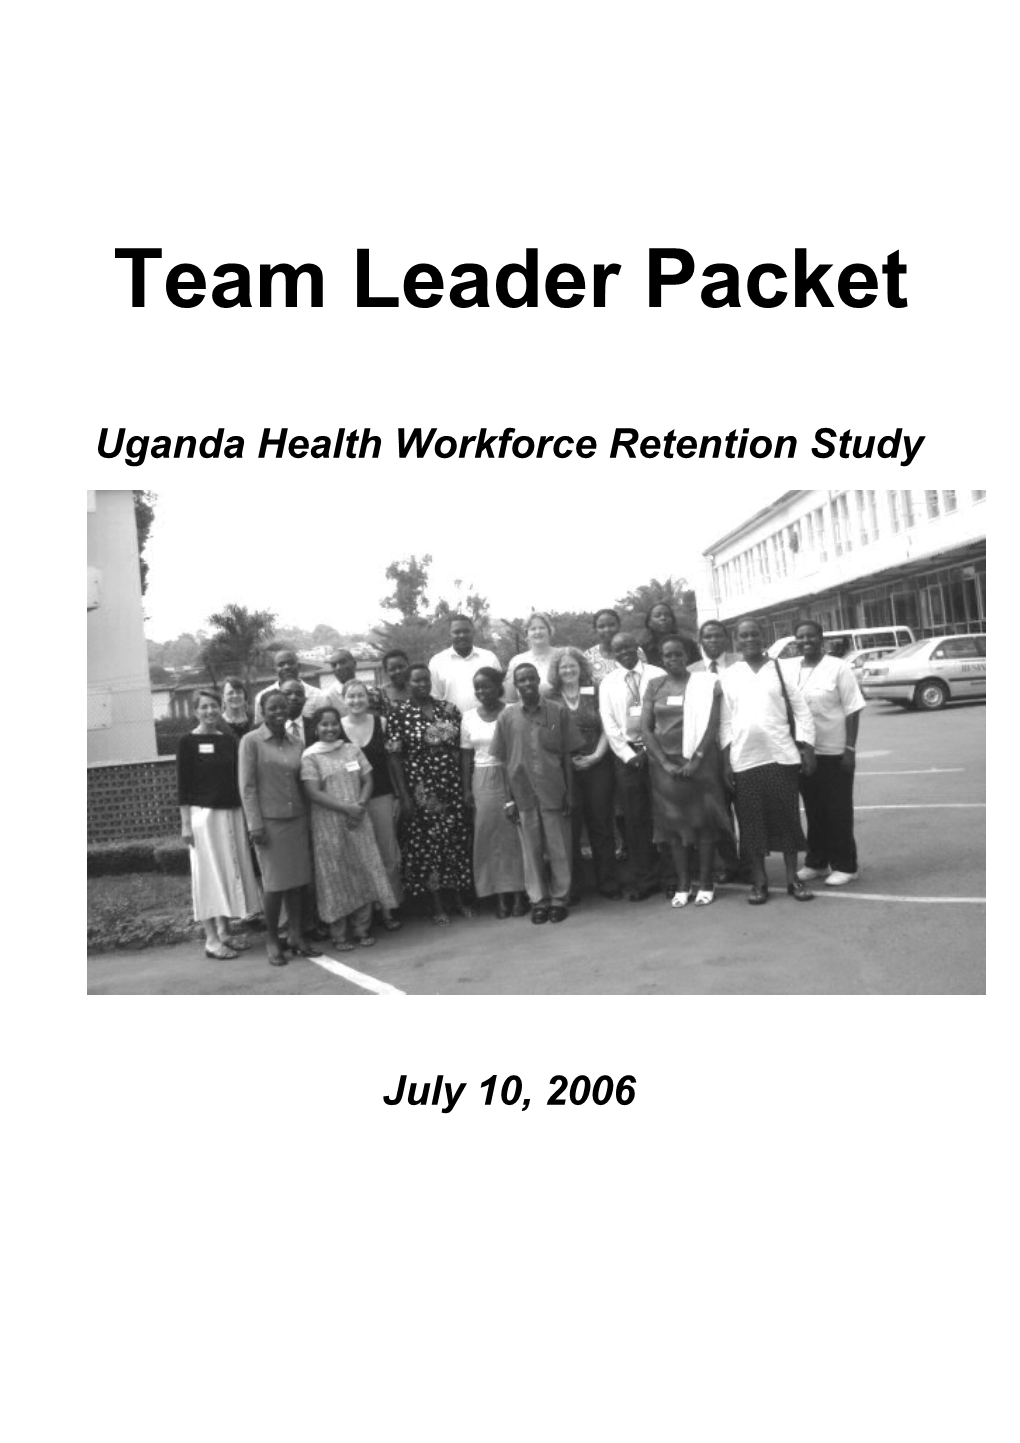 Uganda Health Workforce Retention Study